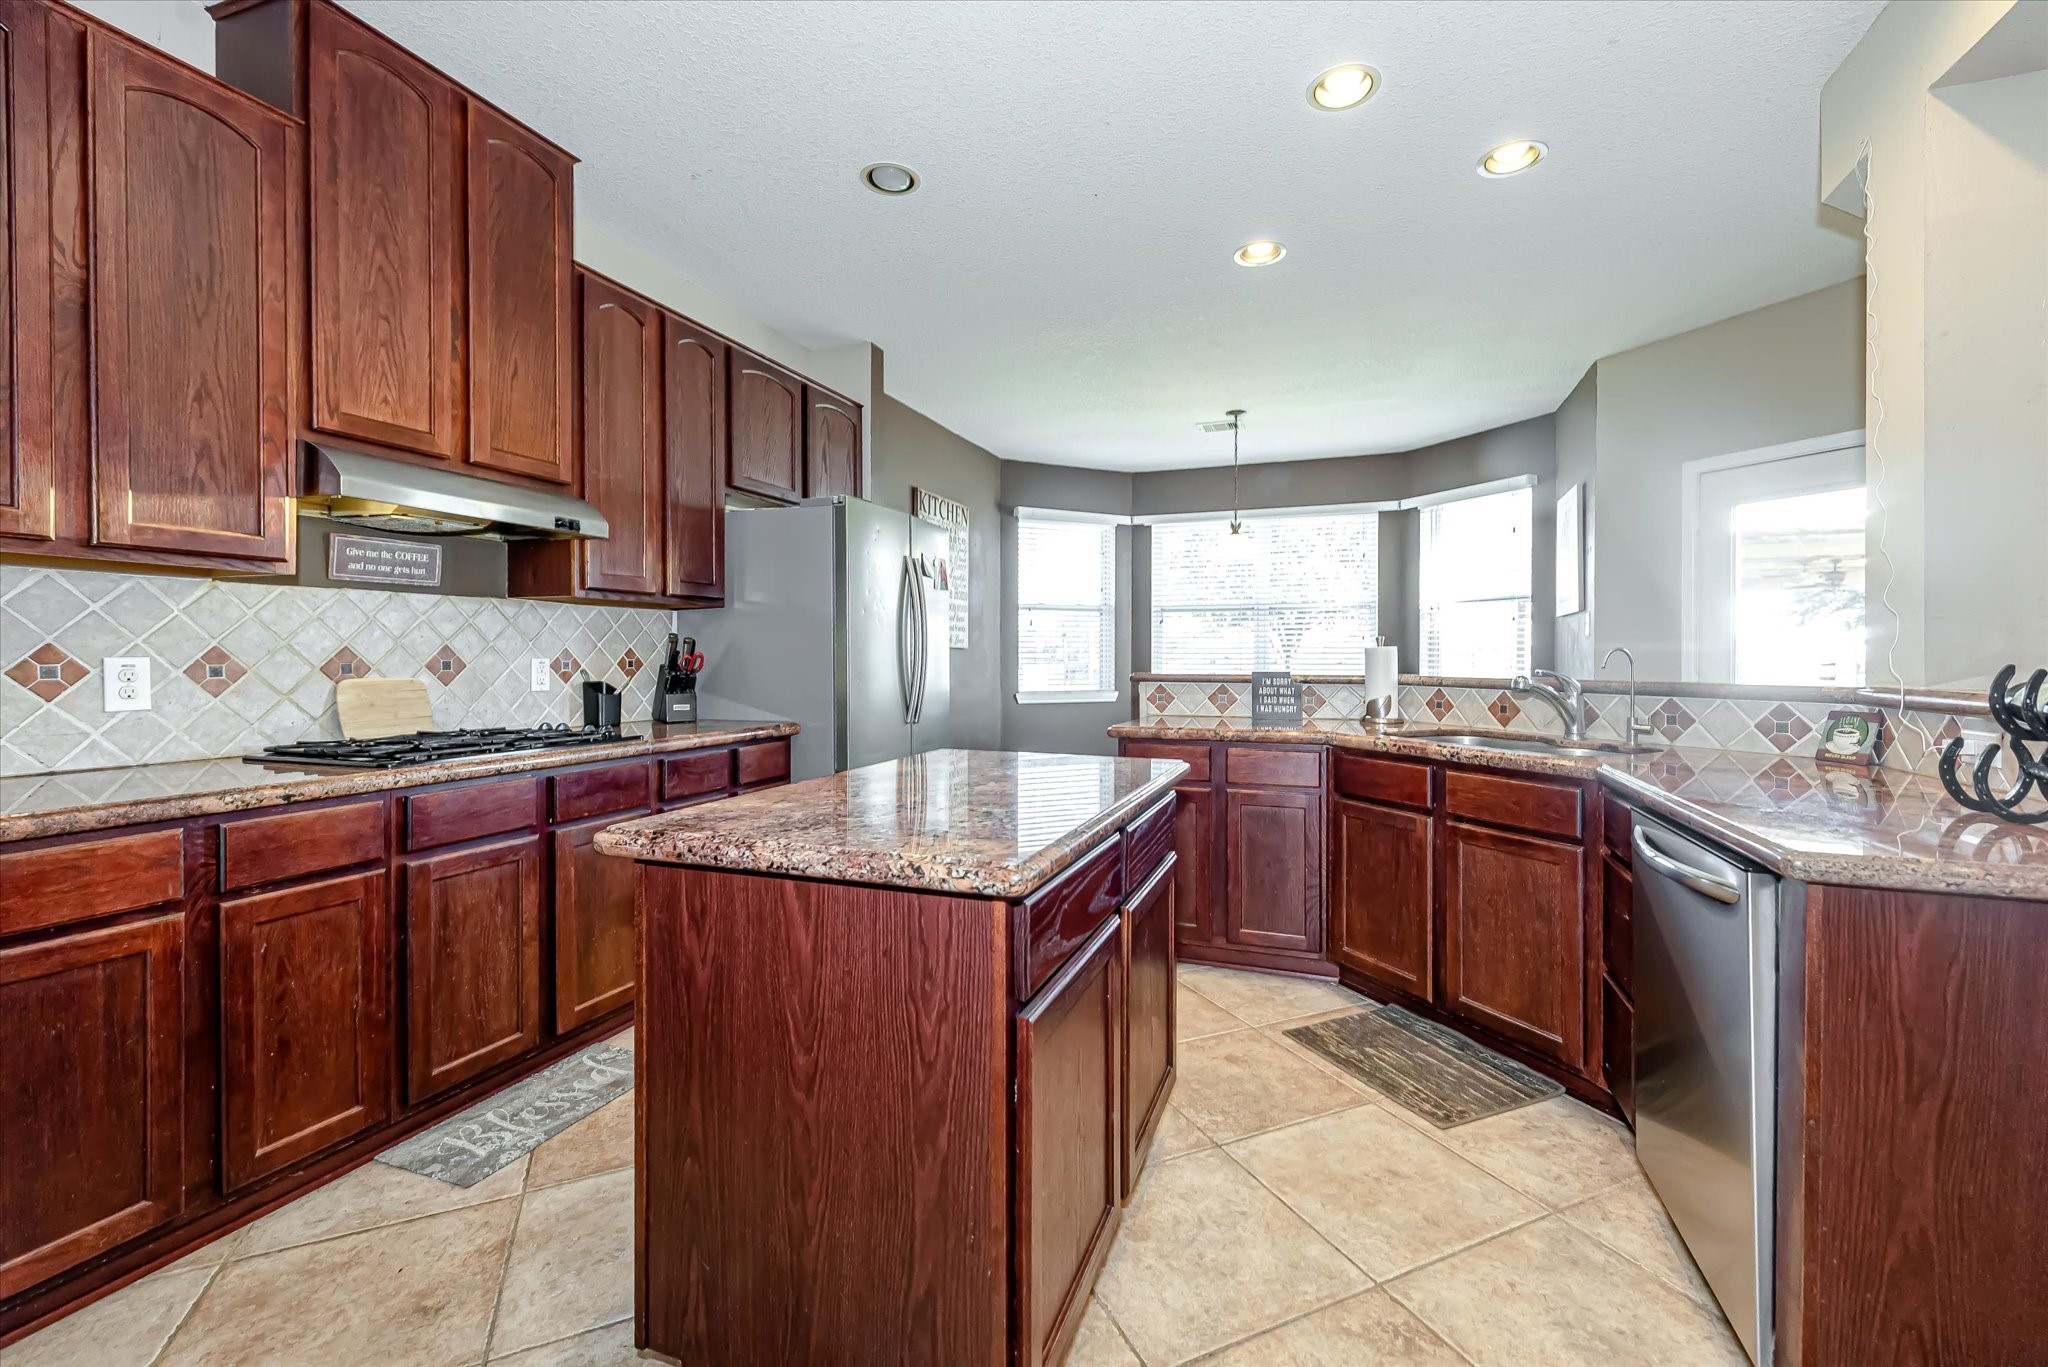 Island kitchen has tile floor, granite counters and tile backsplash.